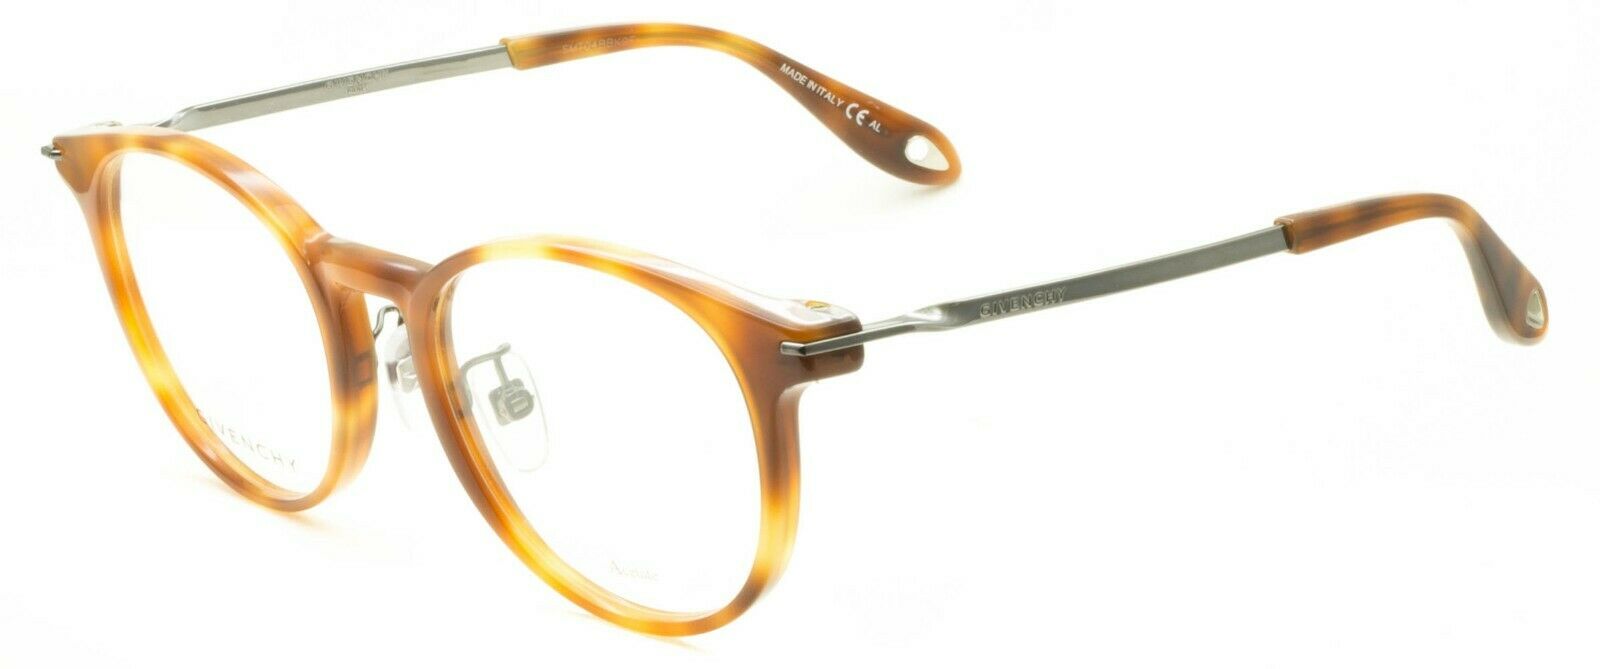 GIVENCHY GV 0057/F SX7 50mm Eyewear FRAMES RX Optical Glasses Eyeglasses - Italy